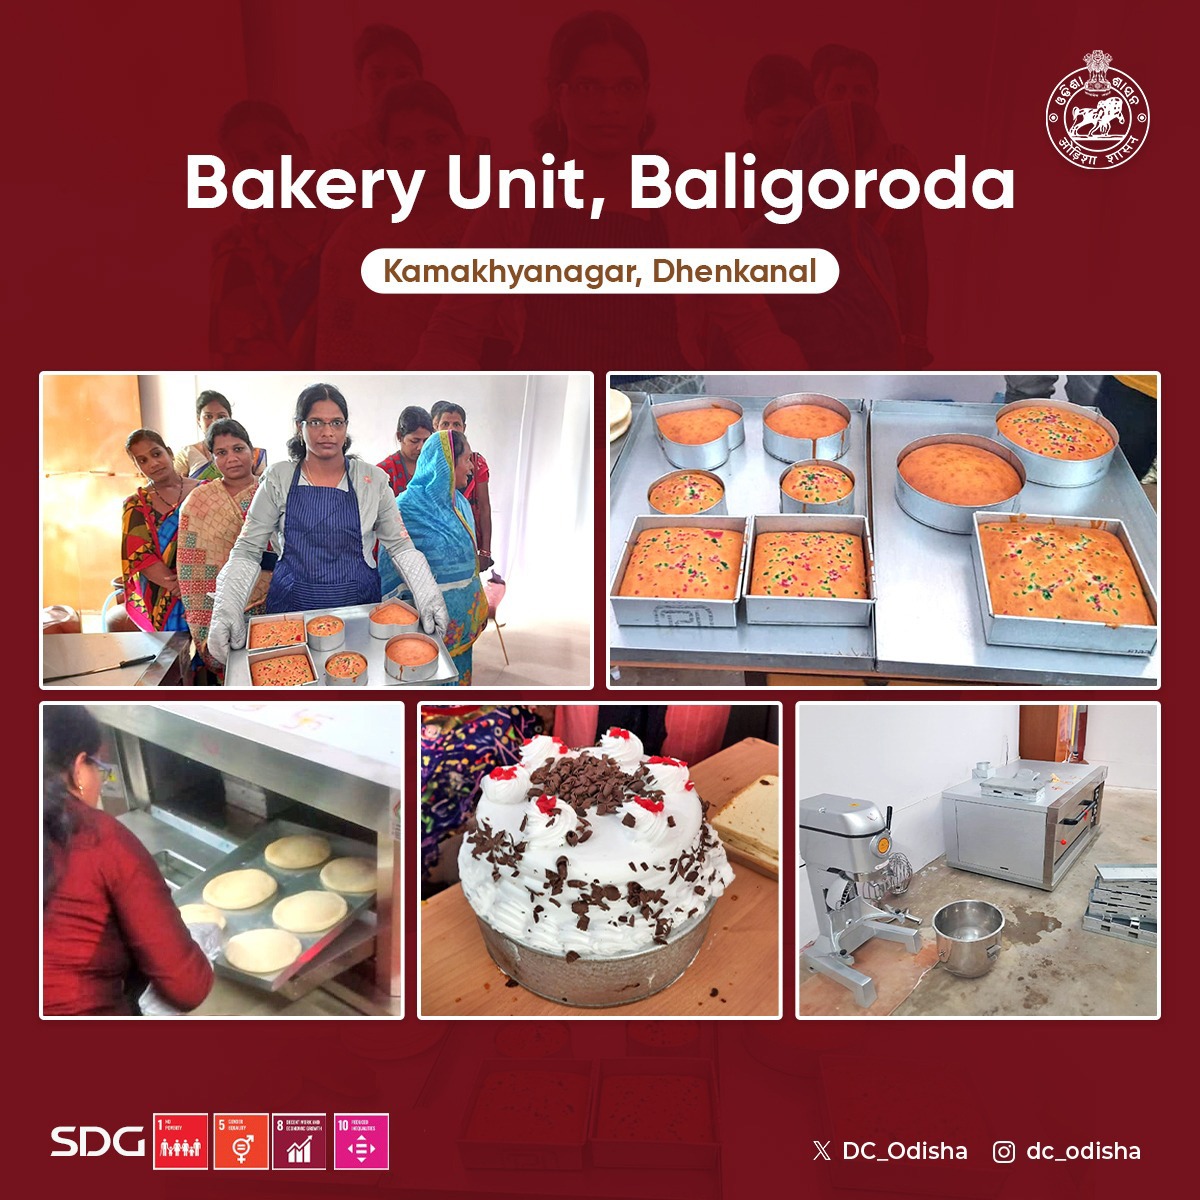 Bakery unit  by WSHG of Baligoroda, Kamakhyanagar, Dhenkanal- Sustainable livelihood and income enhancement initiative.  #DevelopmentWithAHeart @CMO_Odisha @SecyChief @_anugarg @PCDept_Odisha  @SDGOdisha @IPR_Odisha @OdishaWater  @mission_shakti @MoSarkar5T @districtadmndkl